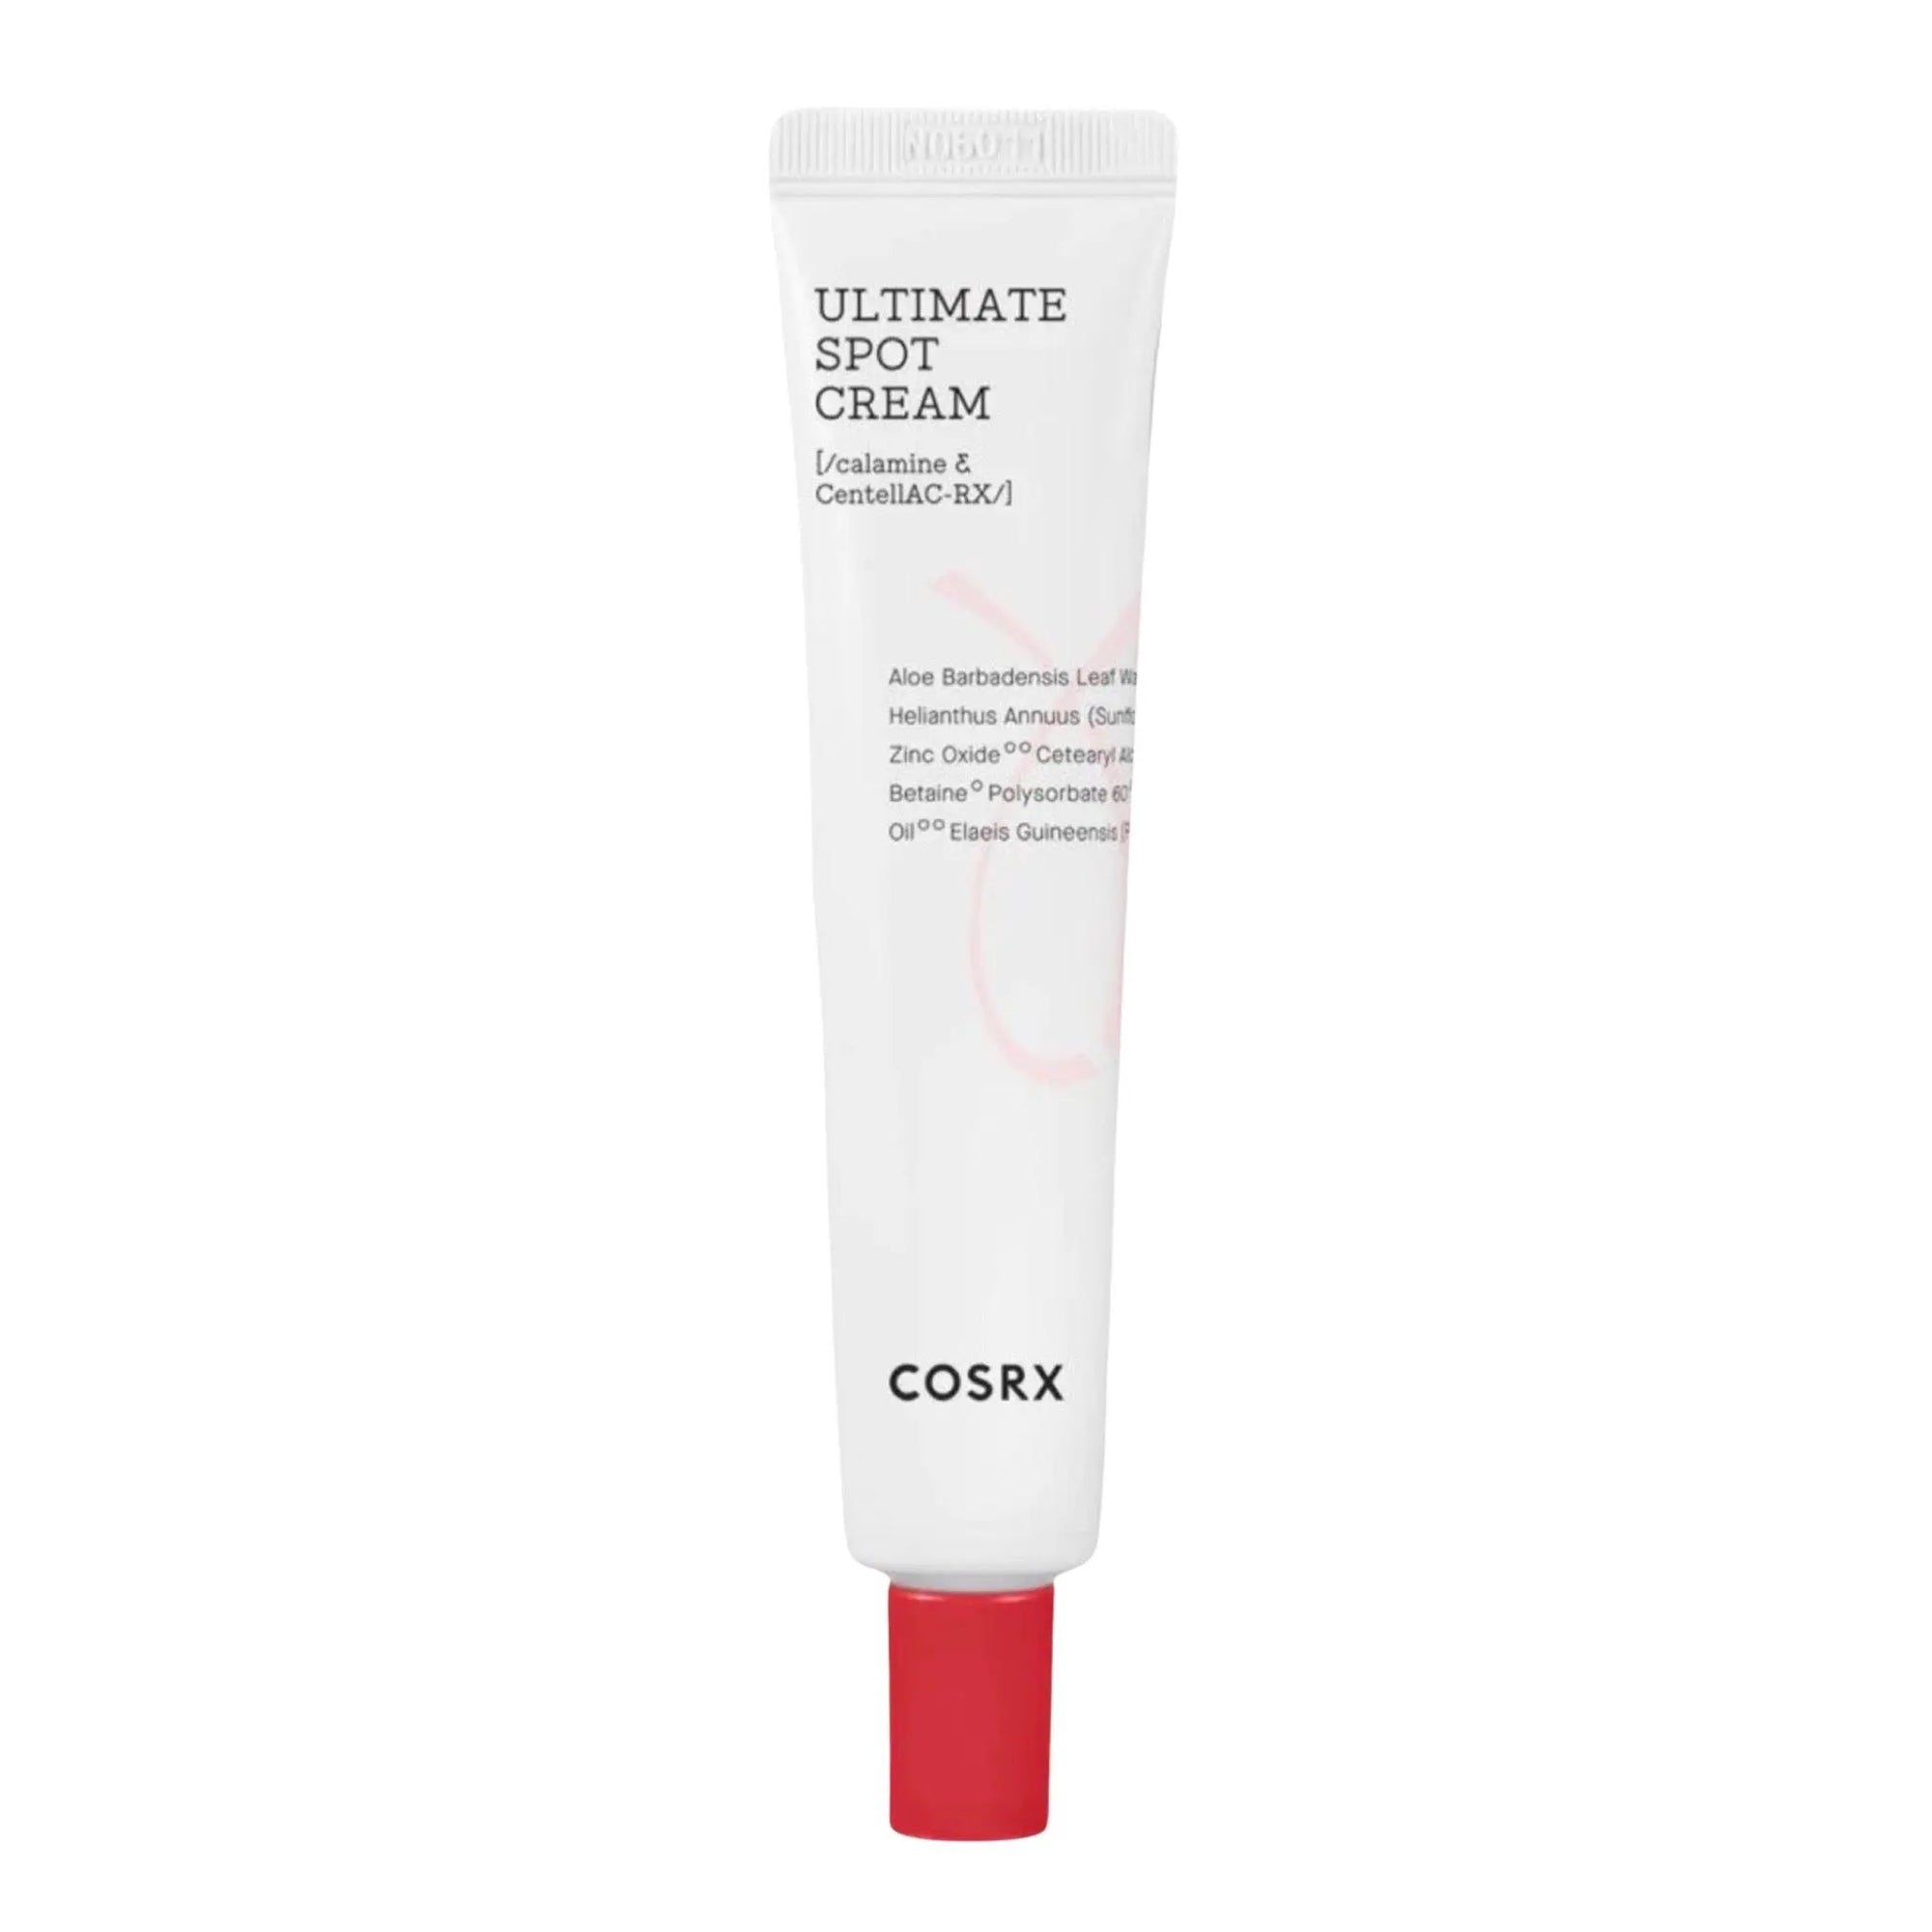 COSRX - Ultimate Spot Cream 30g COSRX